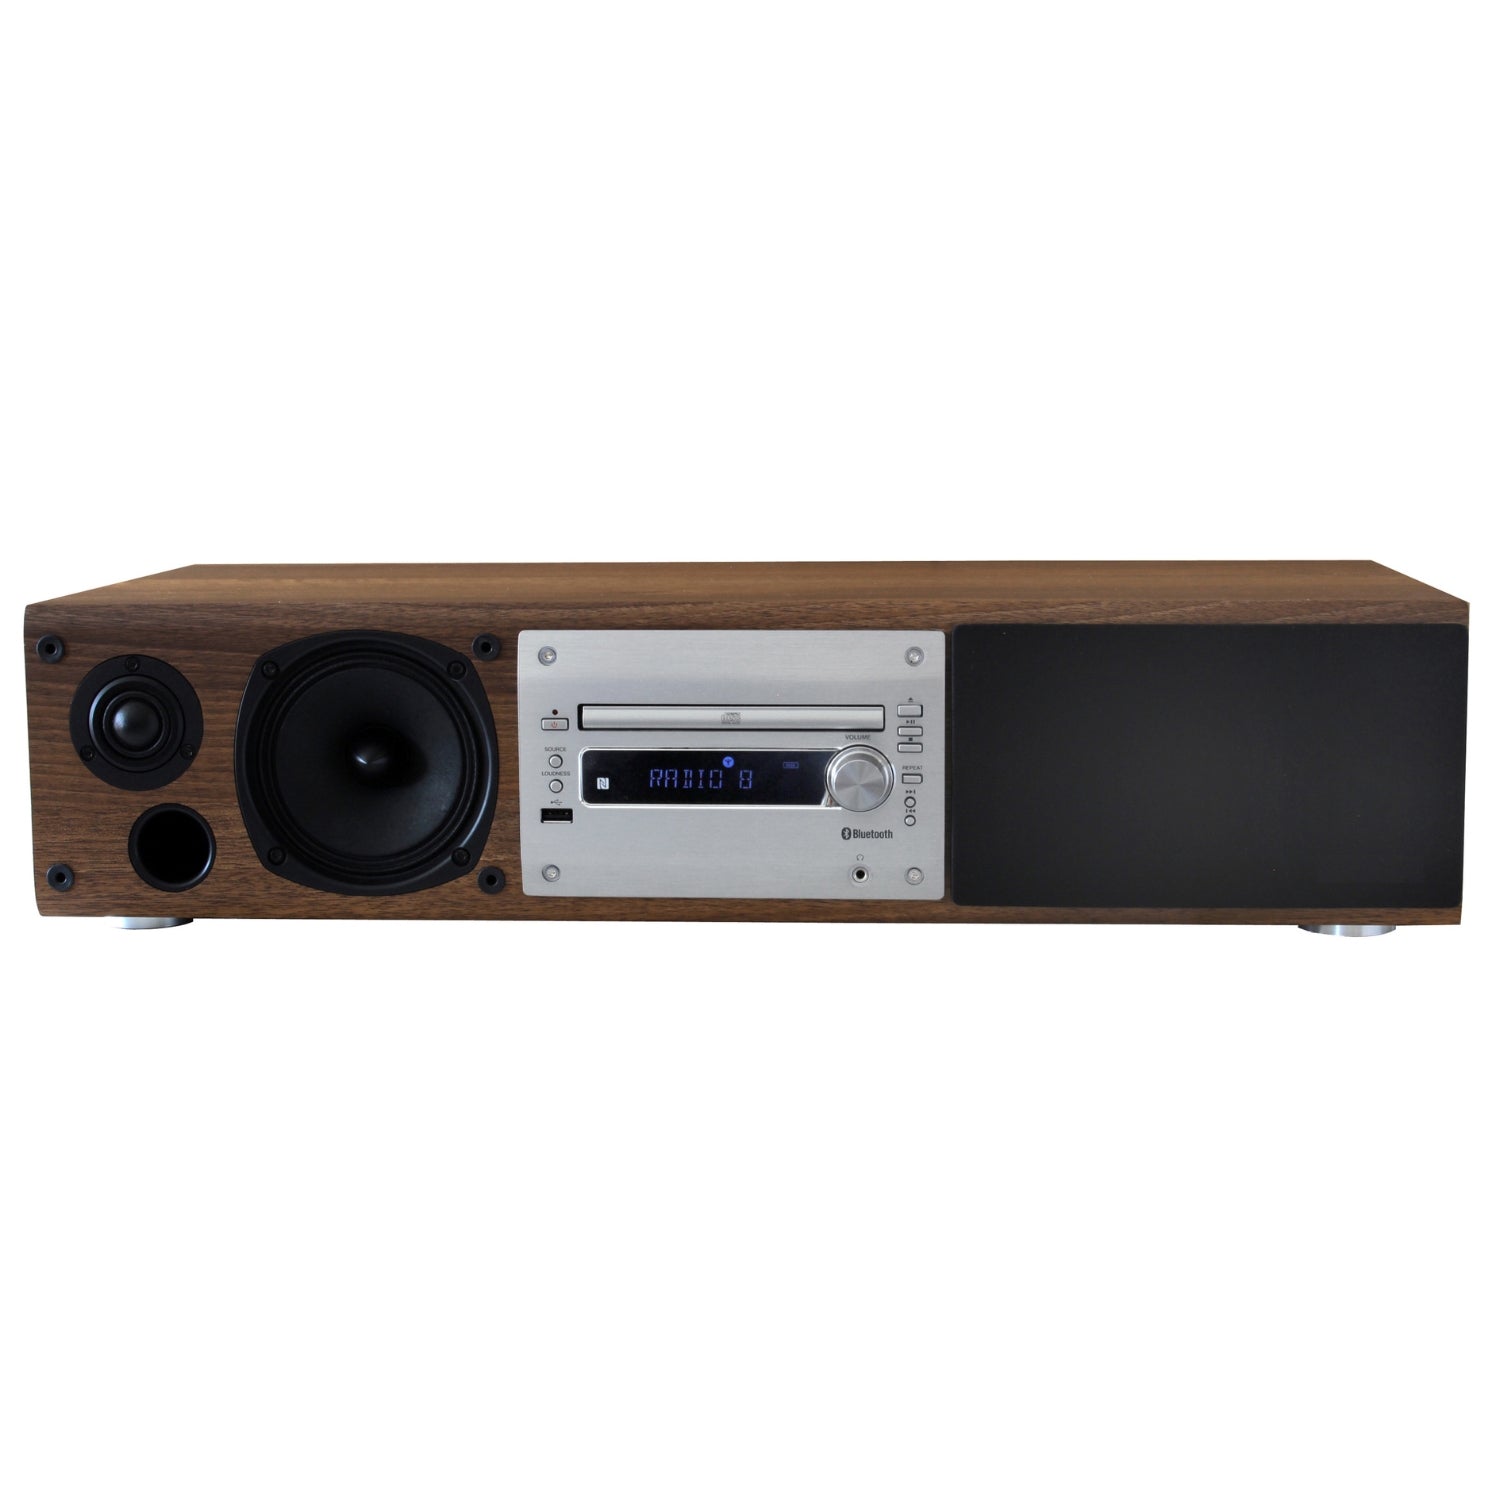 Soundmaster HighLine DAB1000 stereo system HiFi system DAB+ FM CD MP3 USB Bluetooth streaming Optical input 75 ohm antenna